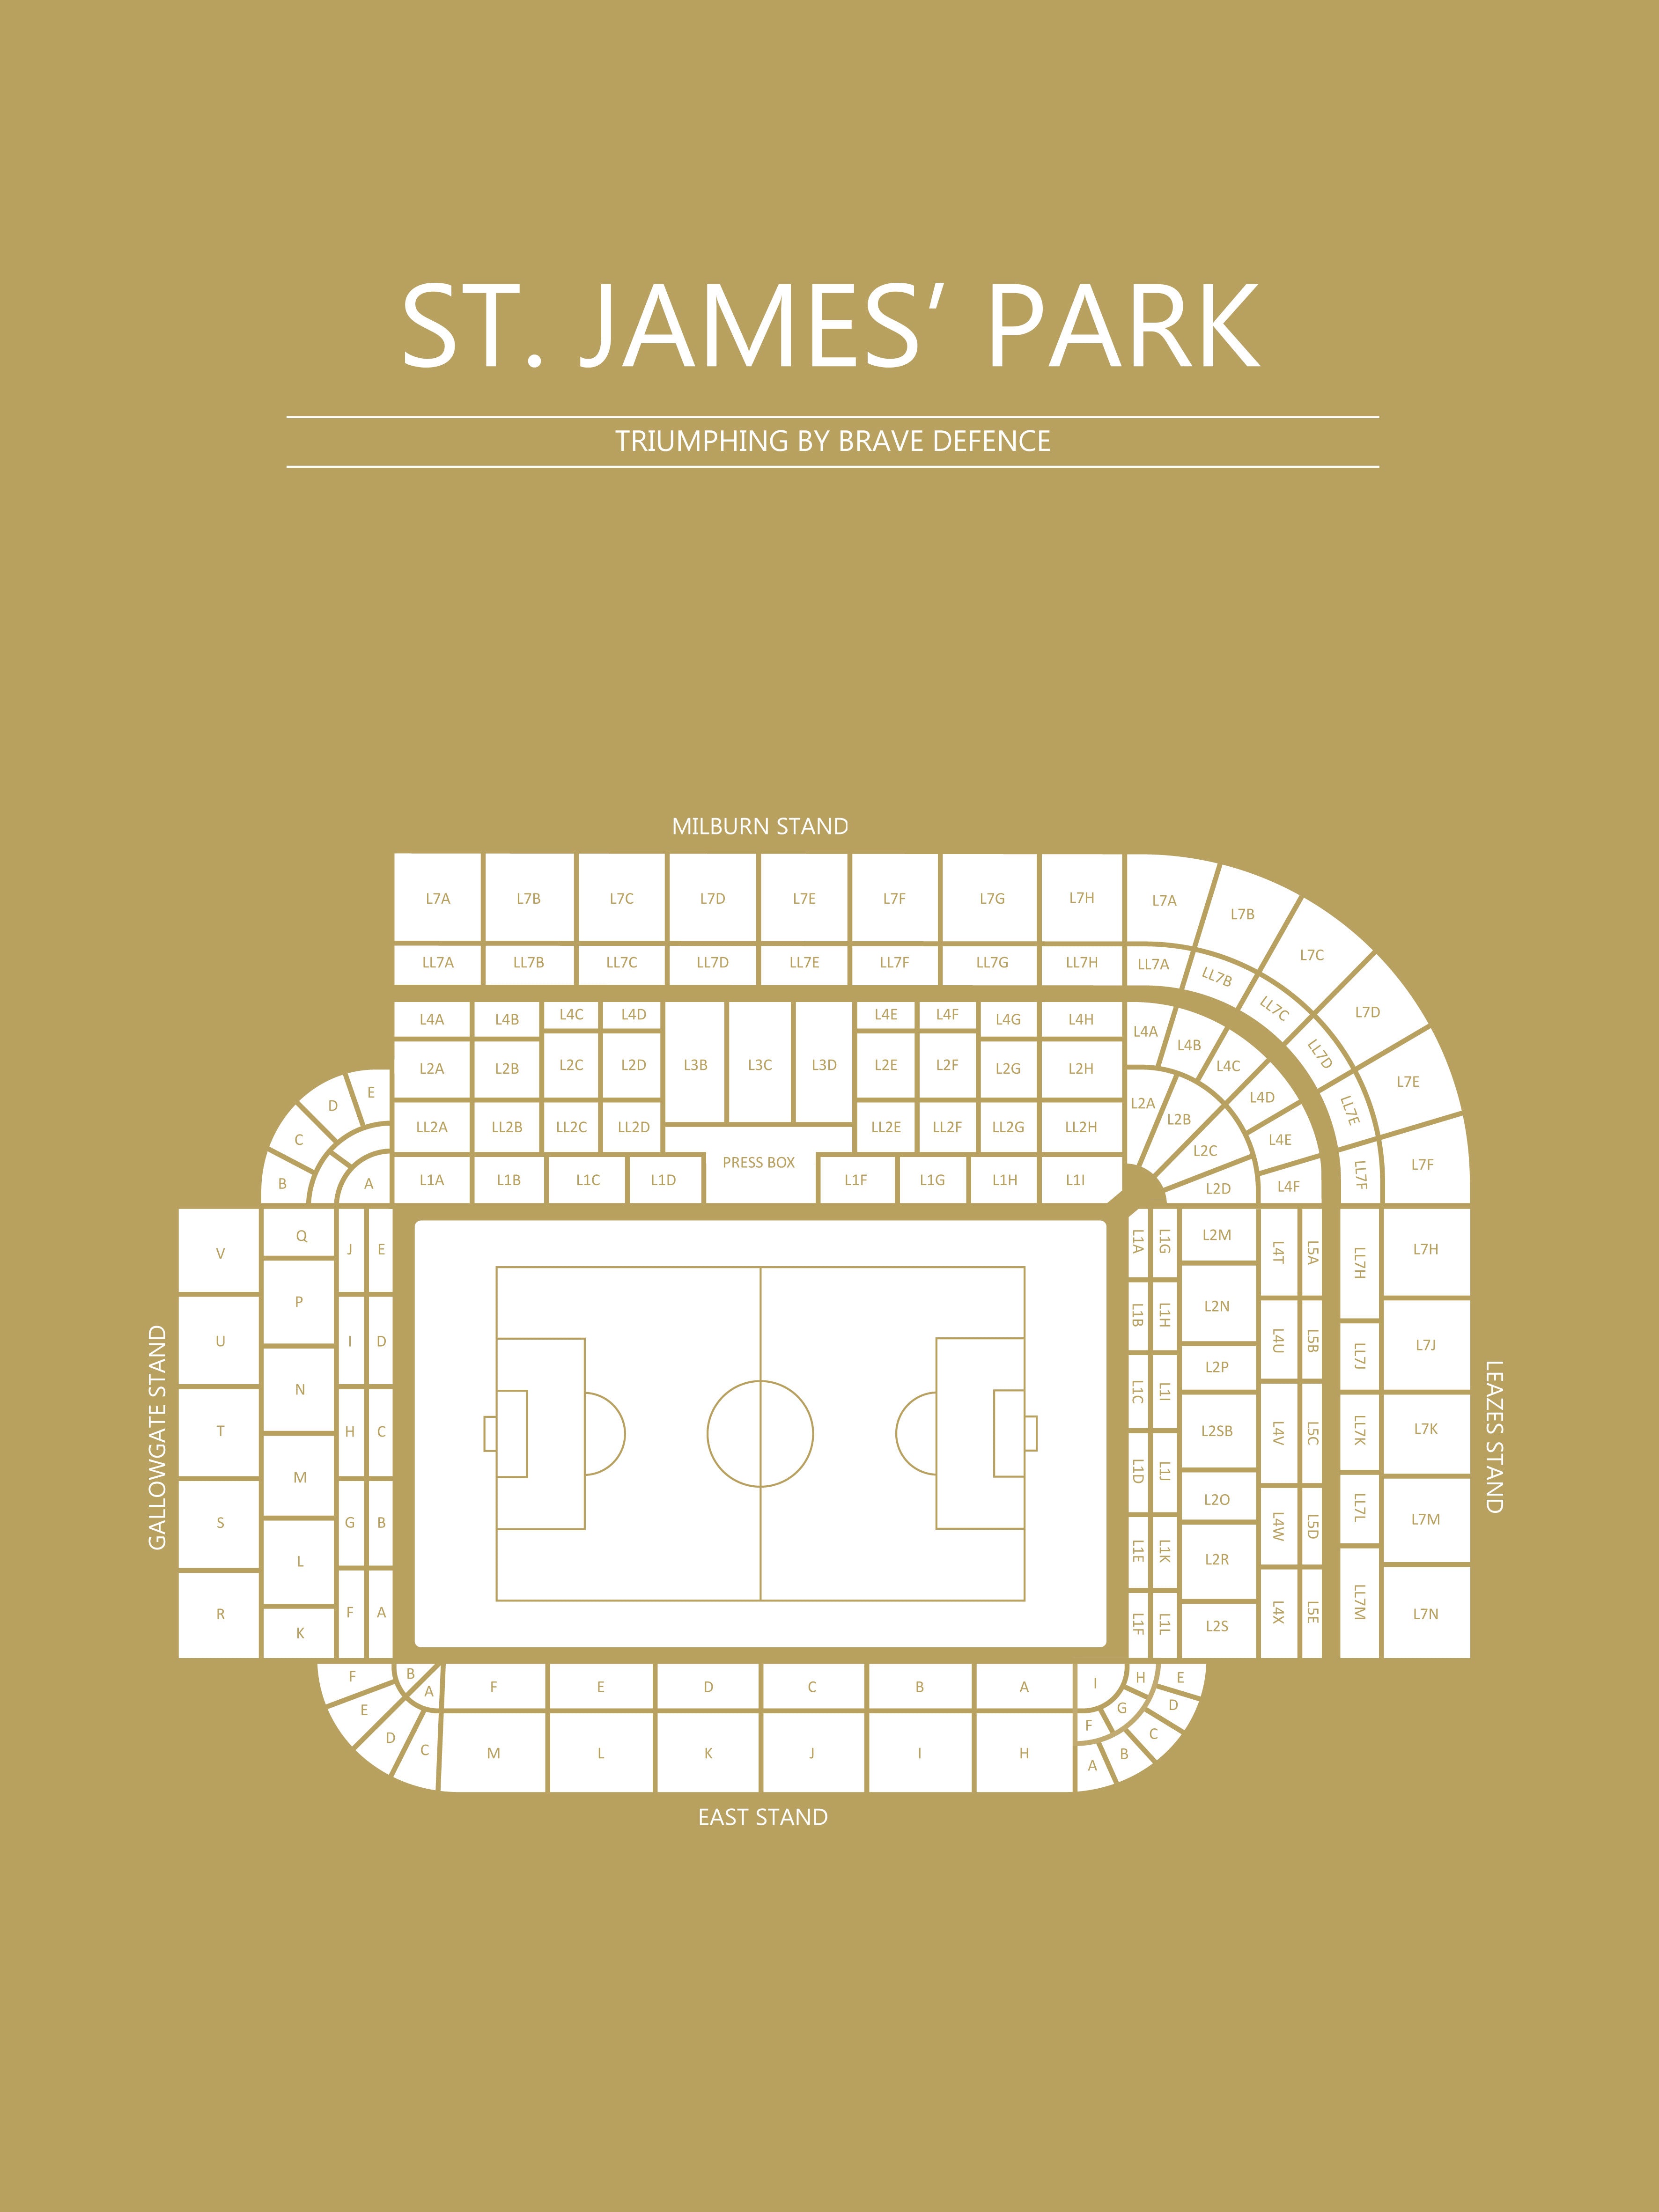 Fodbold plakat Newcastle St. James park karry